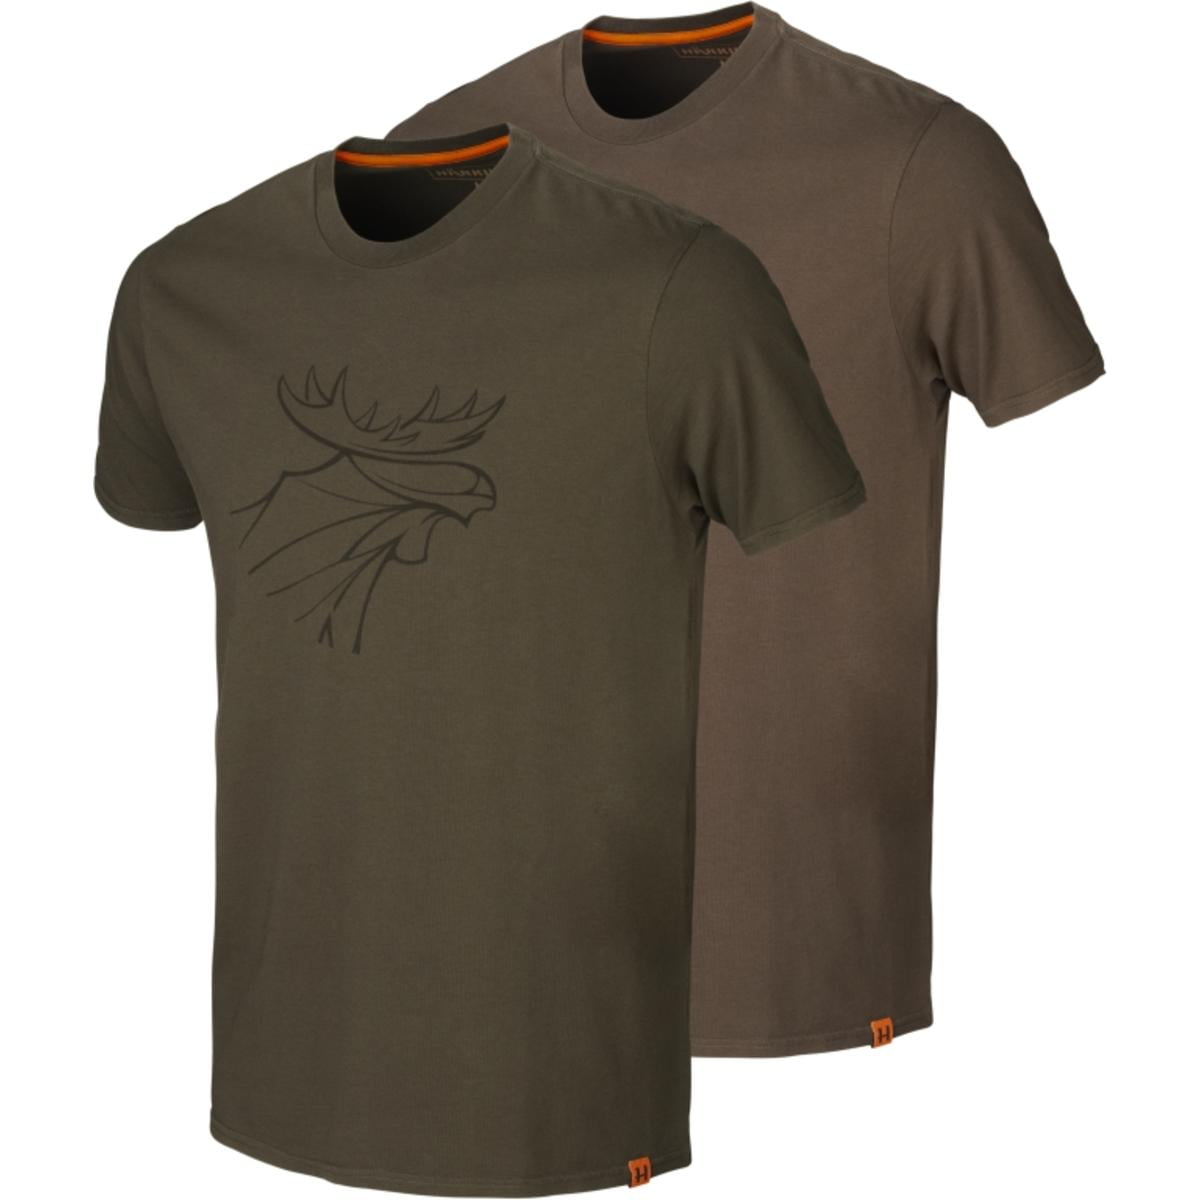 Harkila graphic t-shirt 2-pack green/Slate brown XX-Large - Walmart.com